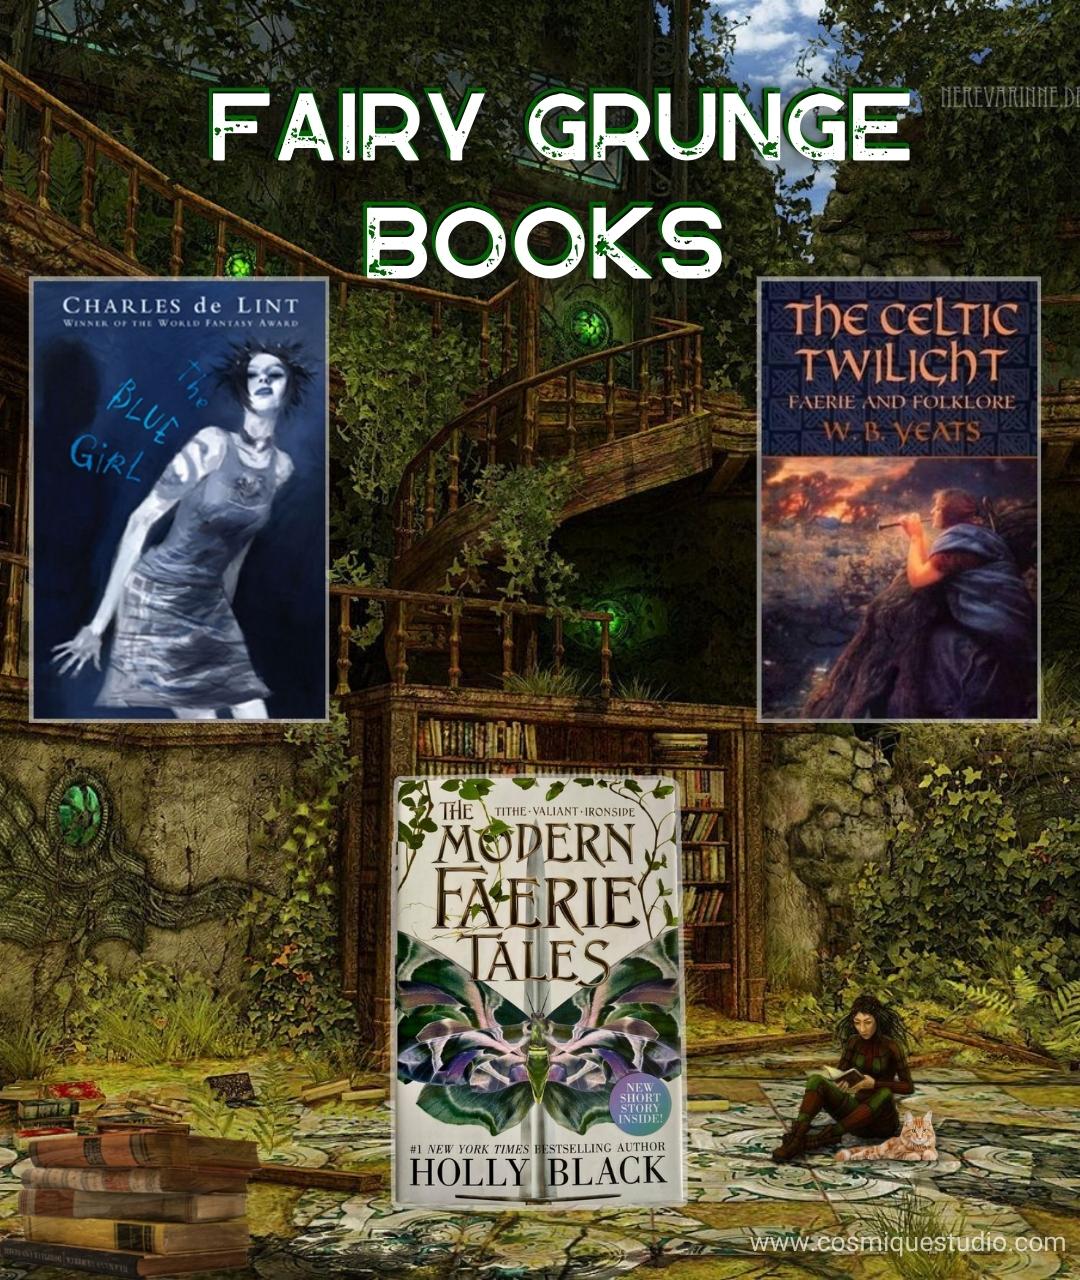 Three fairy grunge books to read.